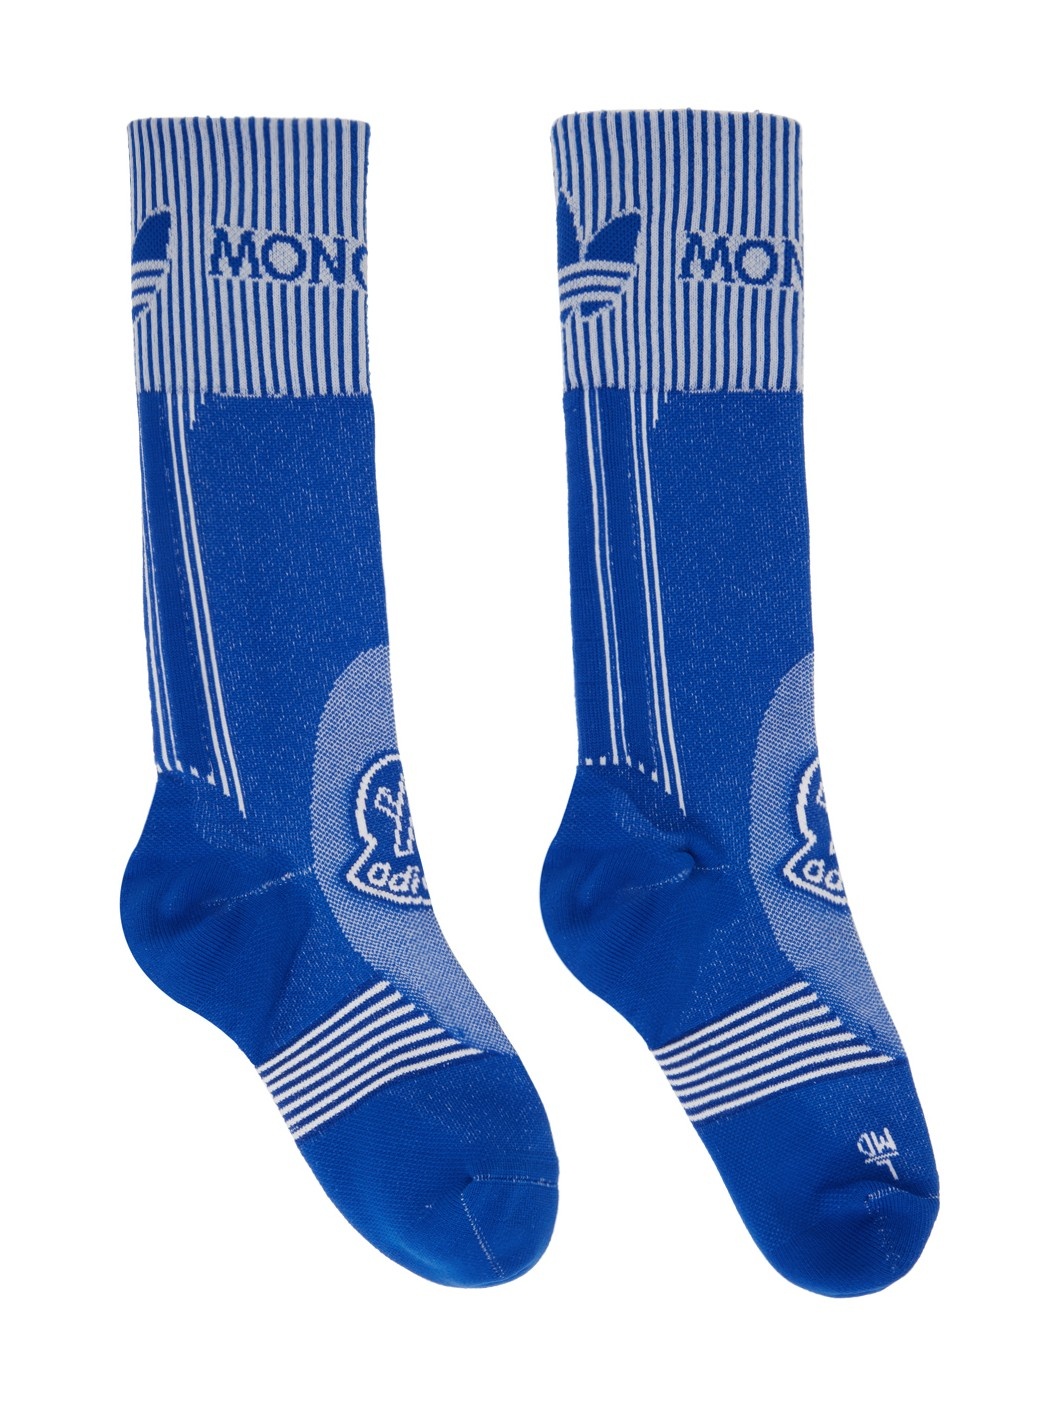 Moncler x adidas Originals Blue Socks - 1